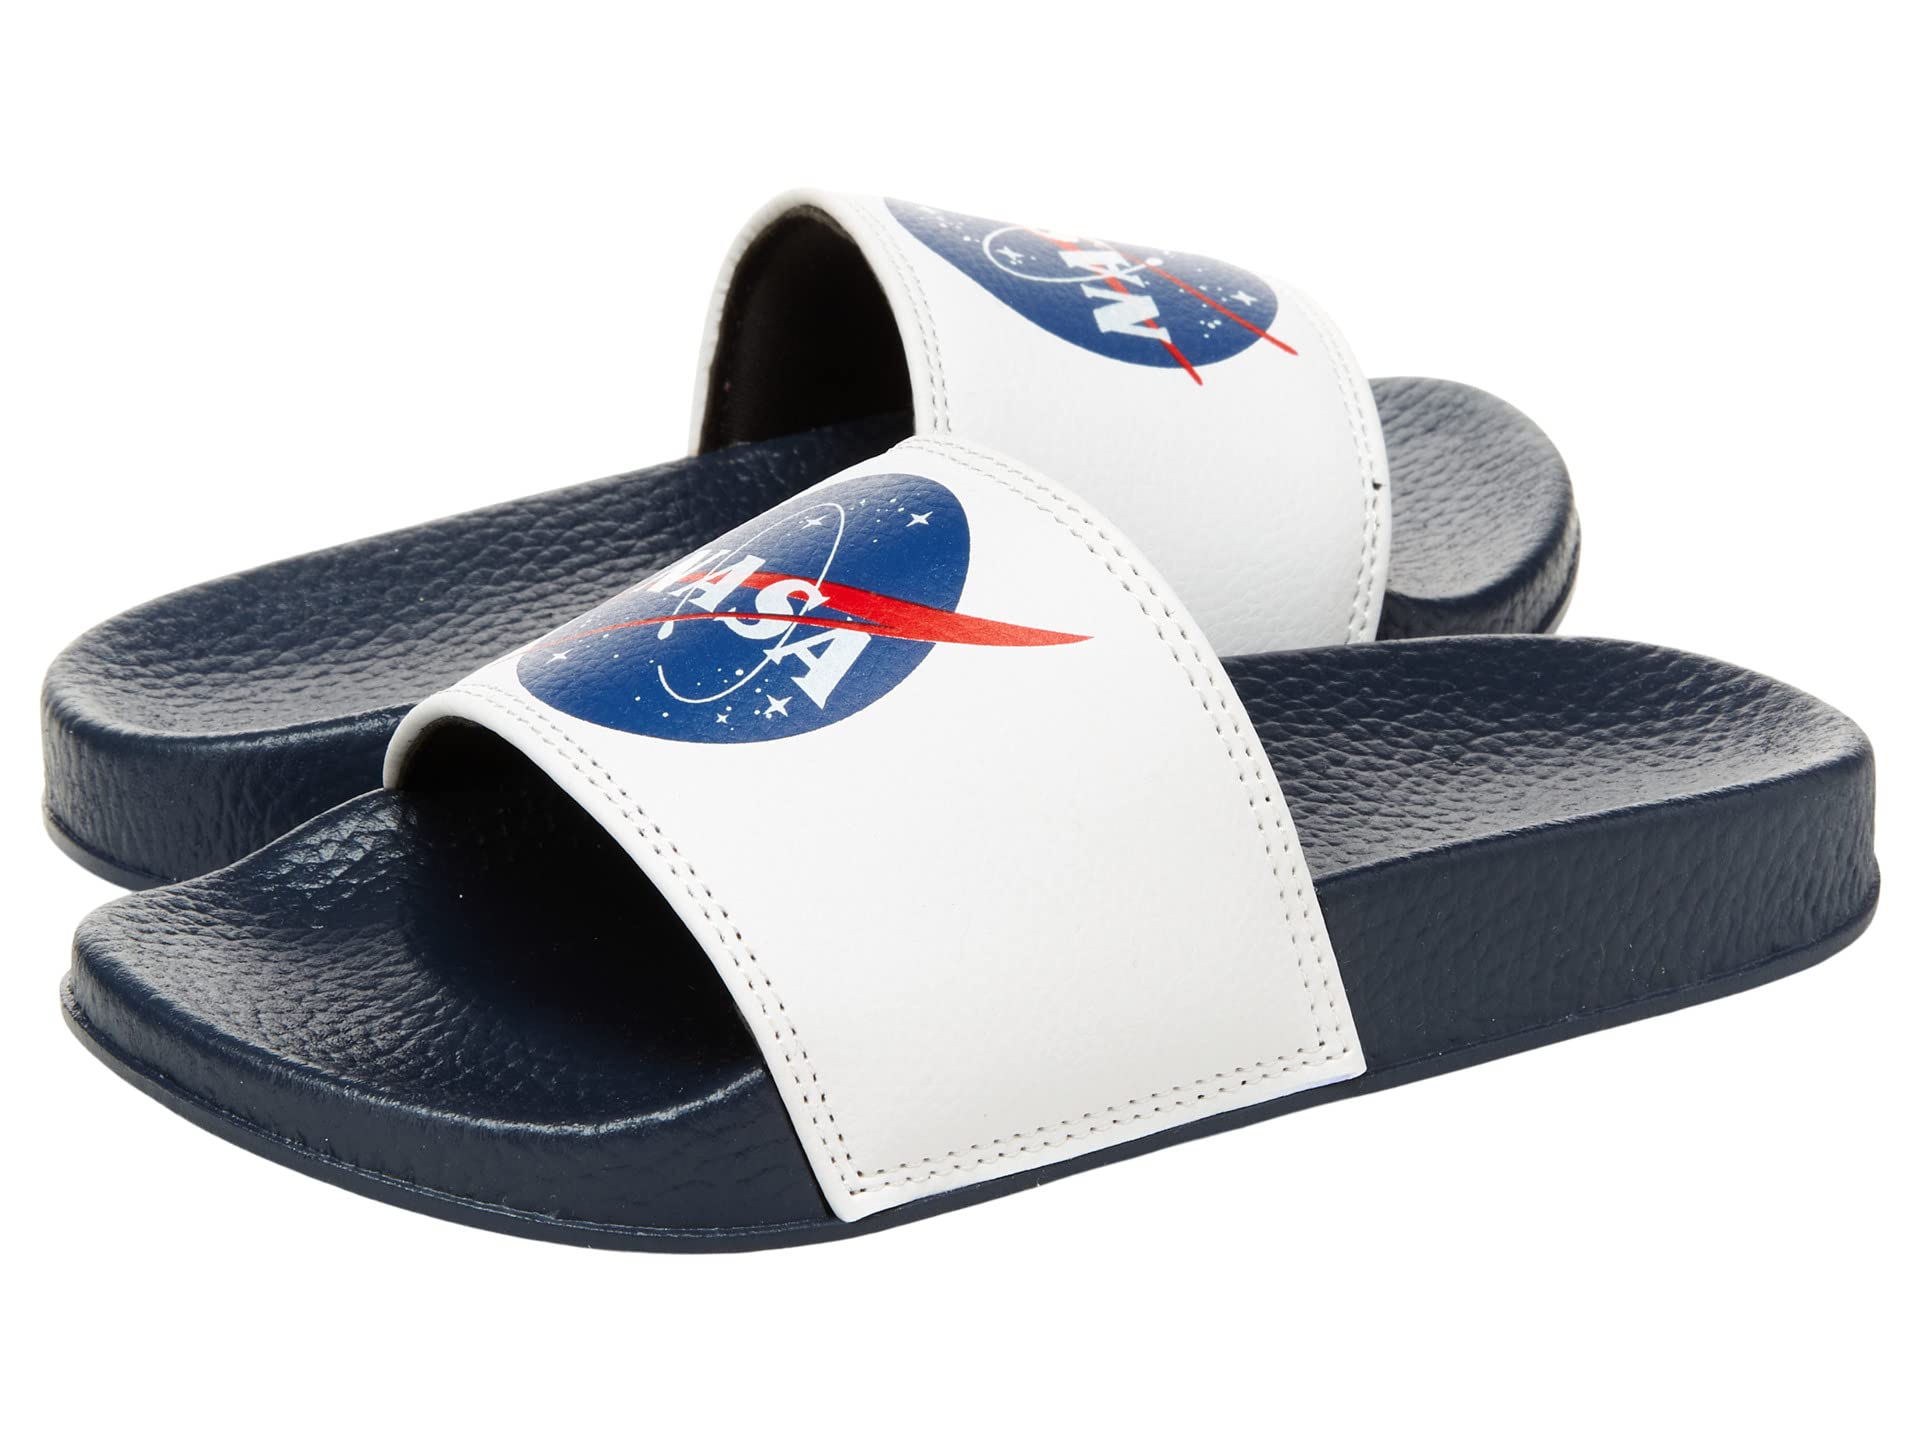 Пляжные сандали NASA, Asteroid-G